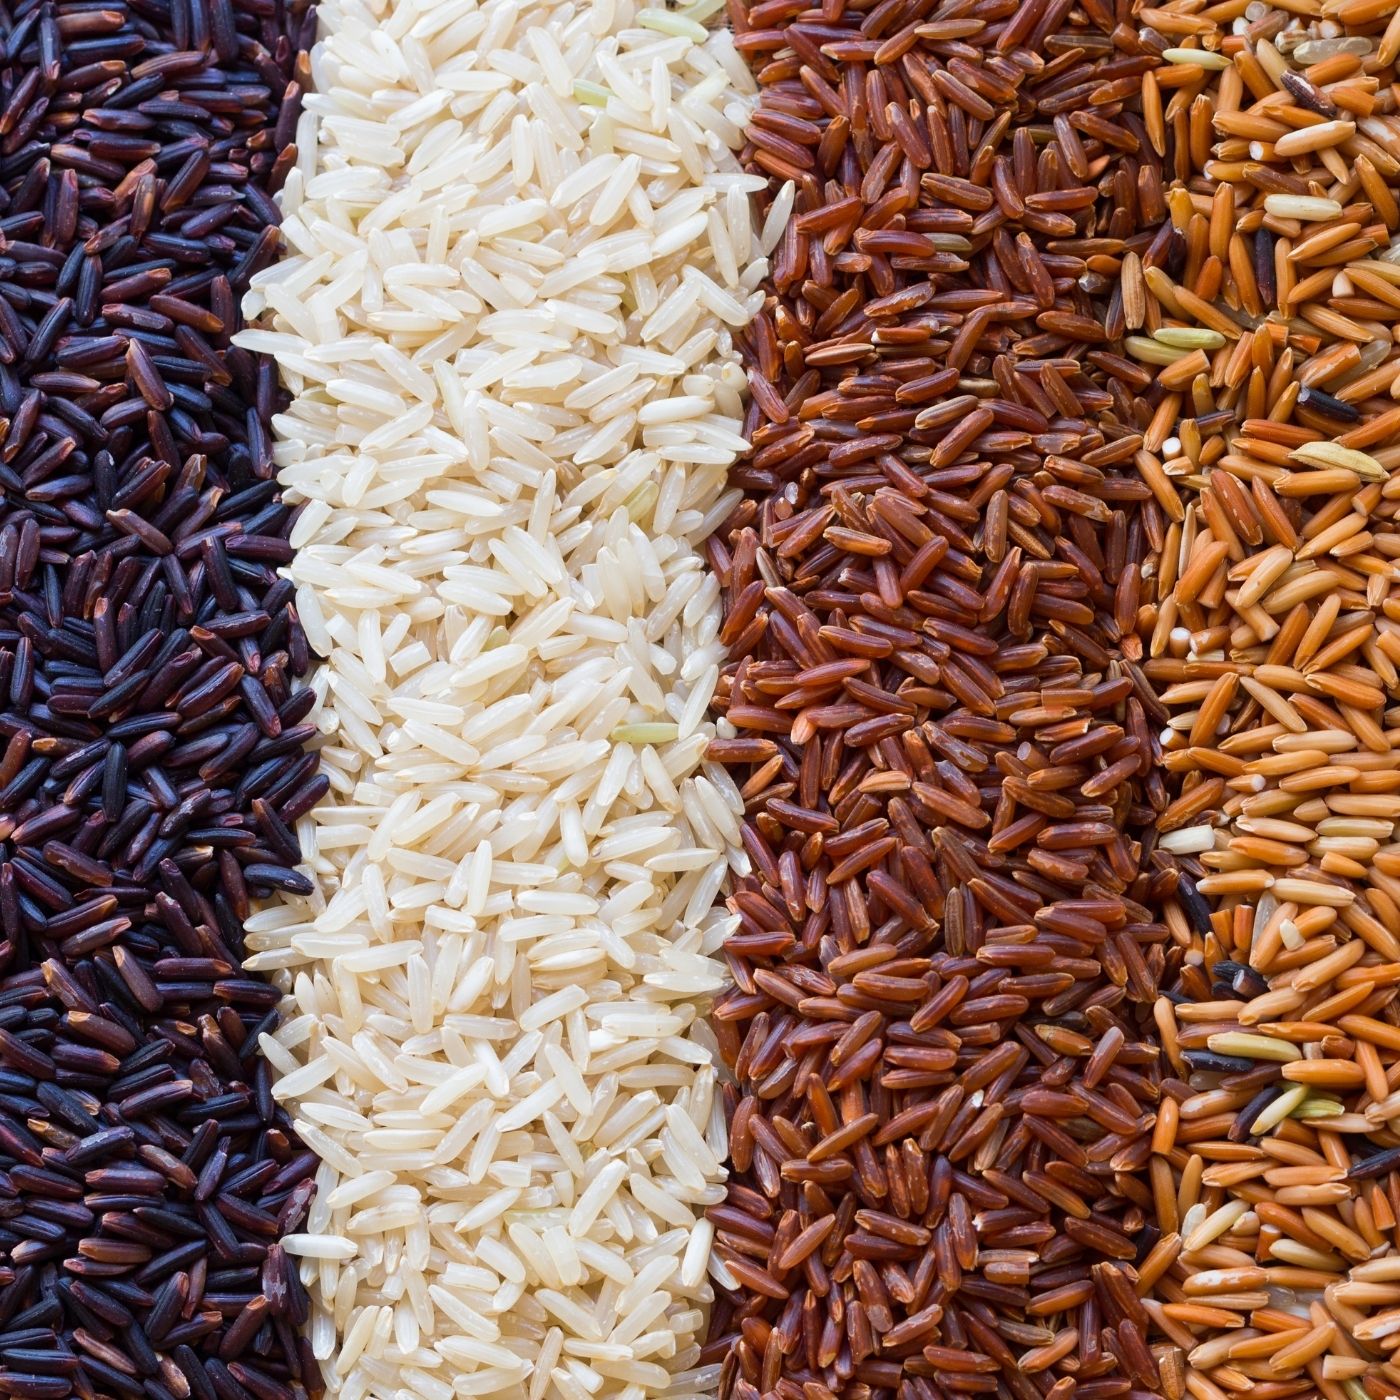 Poongar Rice / Red Rice - Organic - Traditional Rice